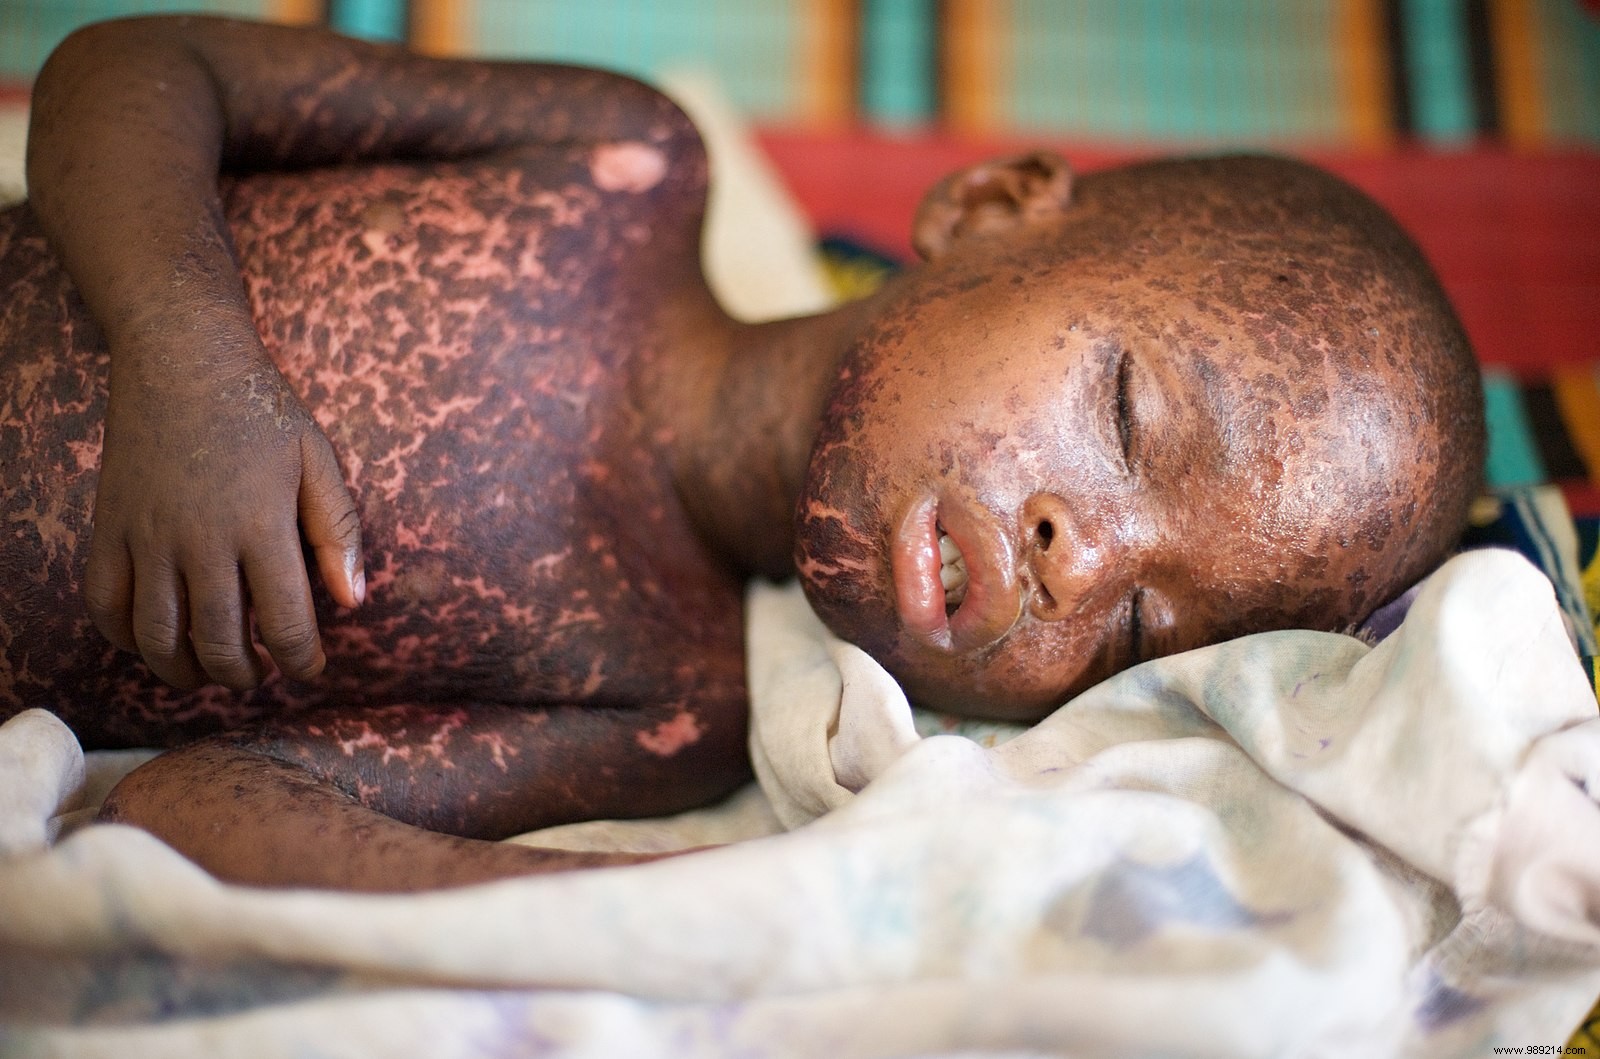 Measles killed at least 200,000 people worldwide in 2019 